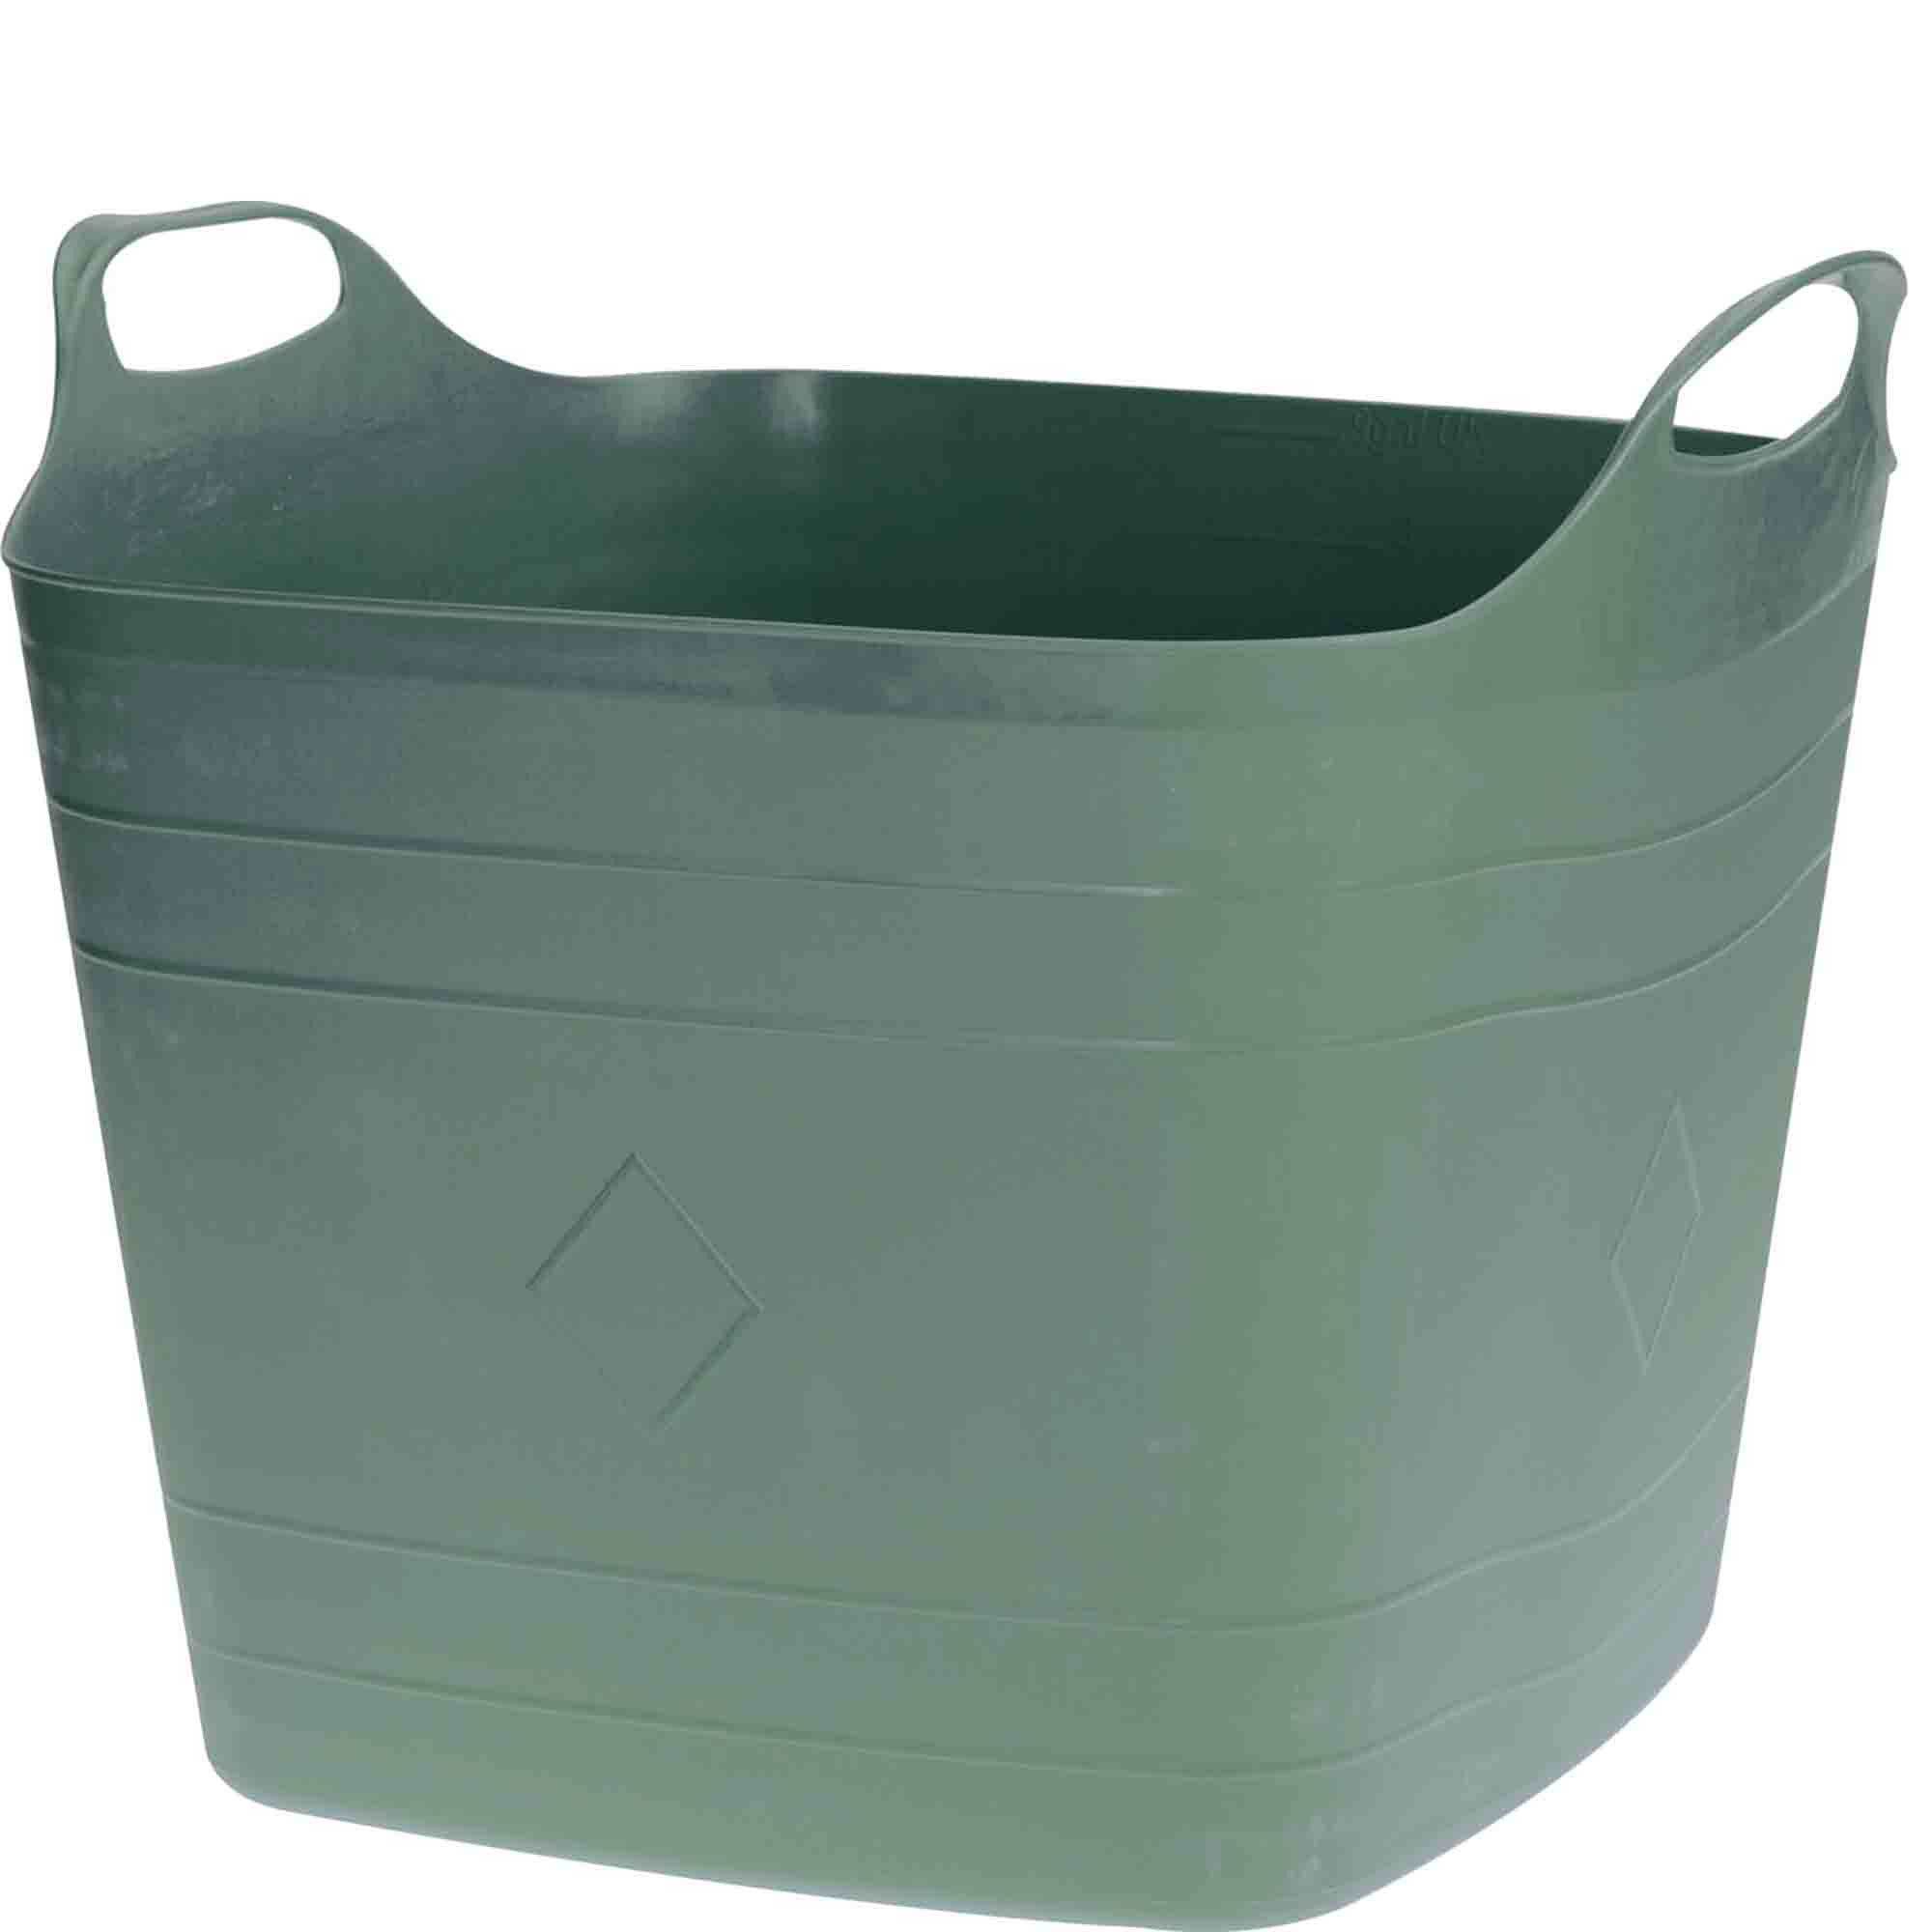 Flexibele kuip groen 40 liter vierkant kunststof emmer wasmand